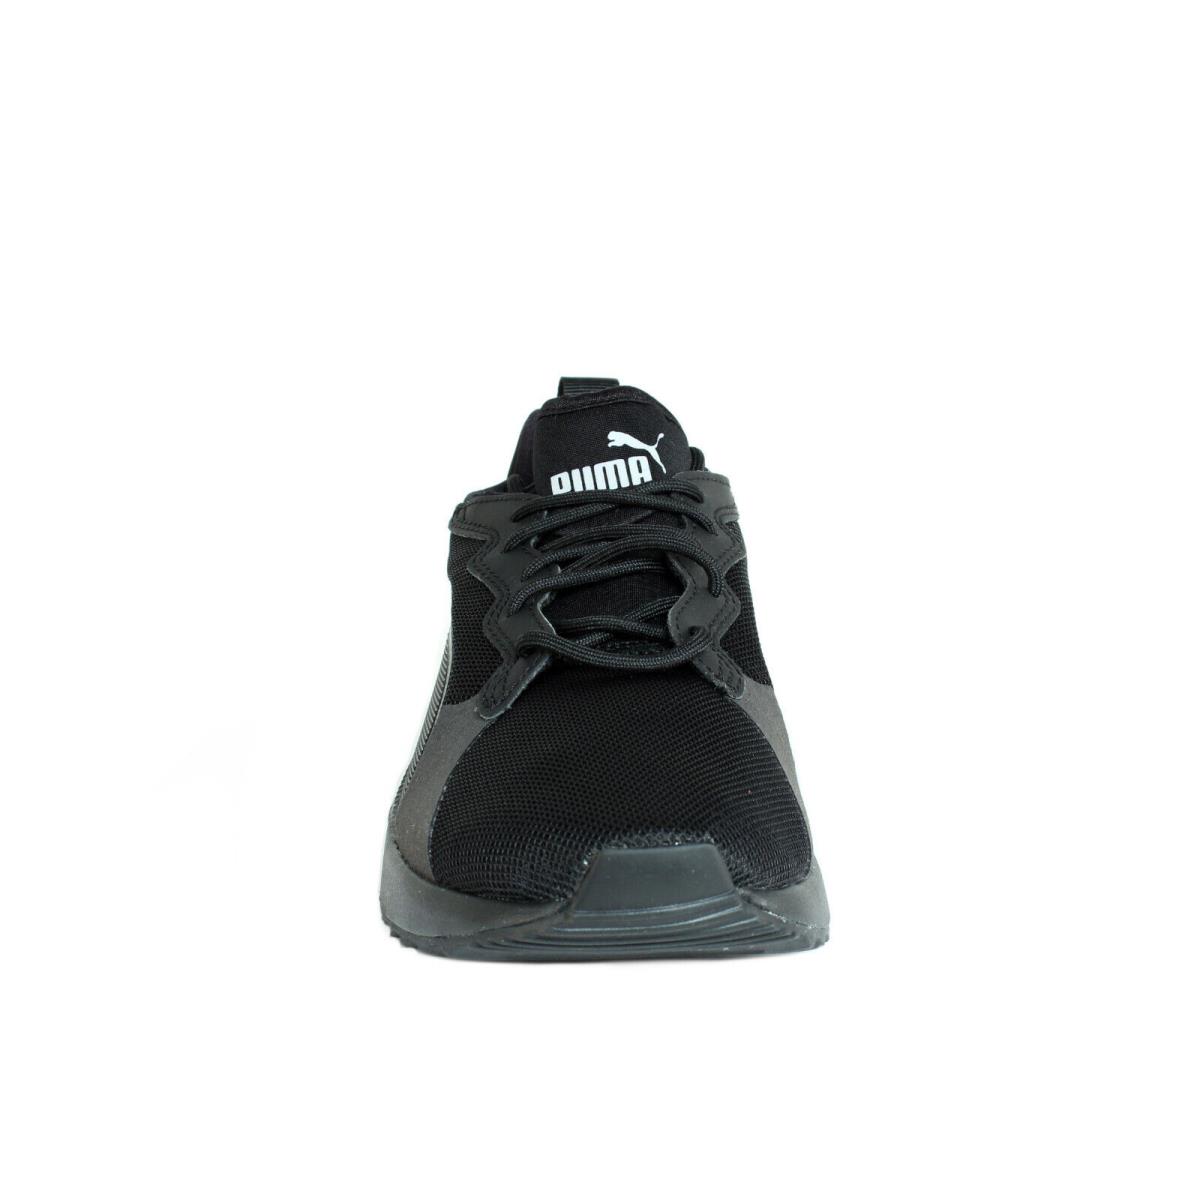 Puma shoes Pacer Next - Black 2